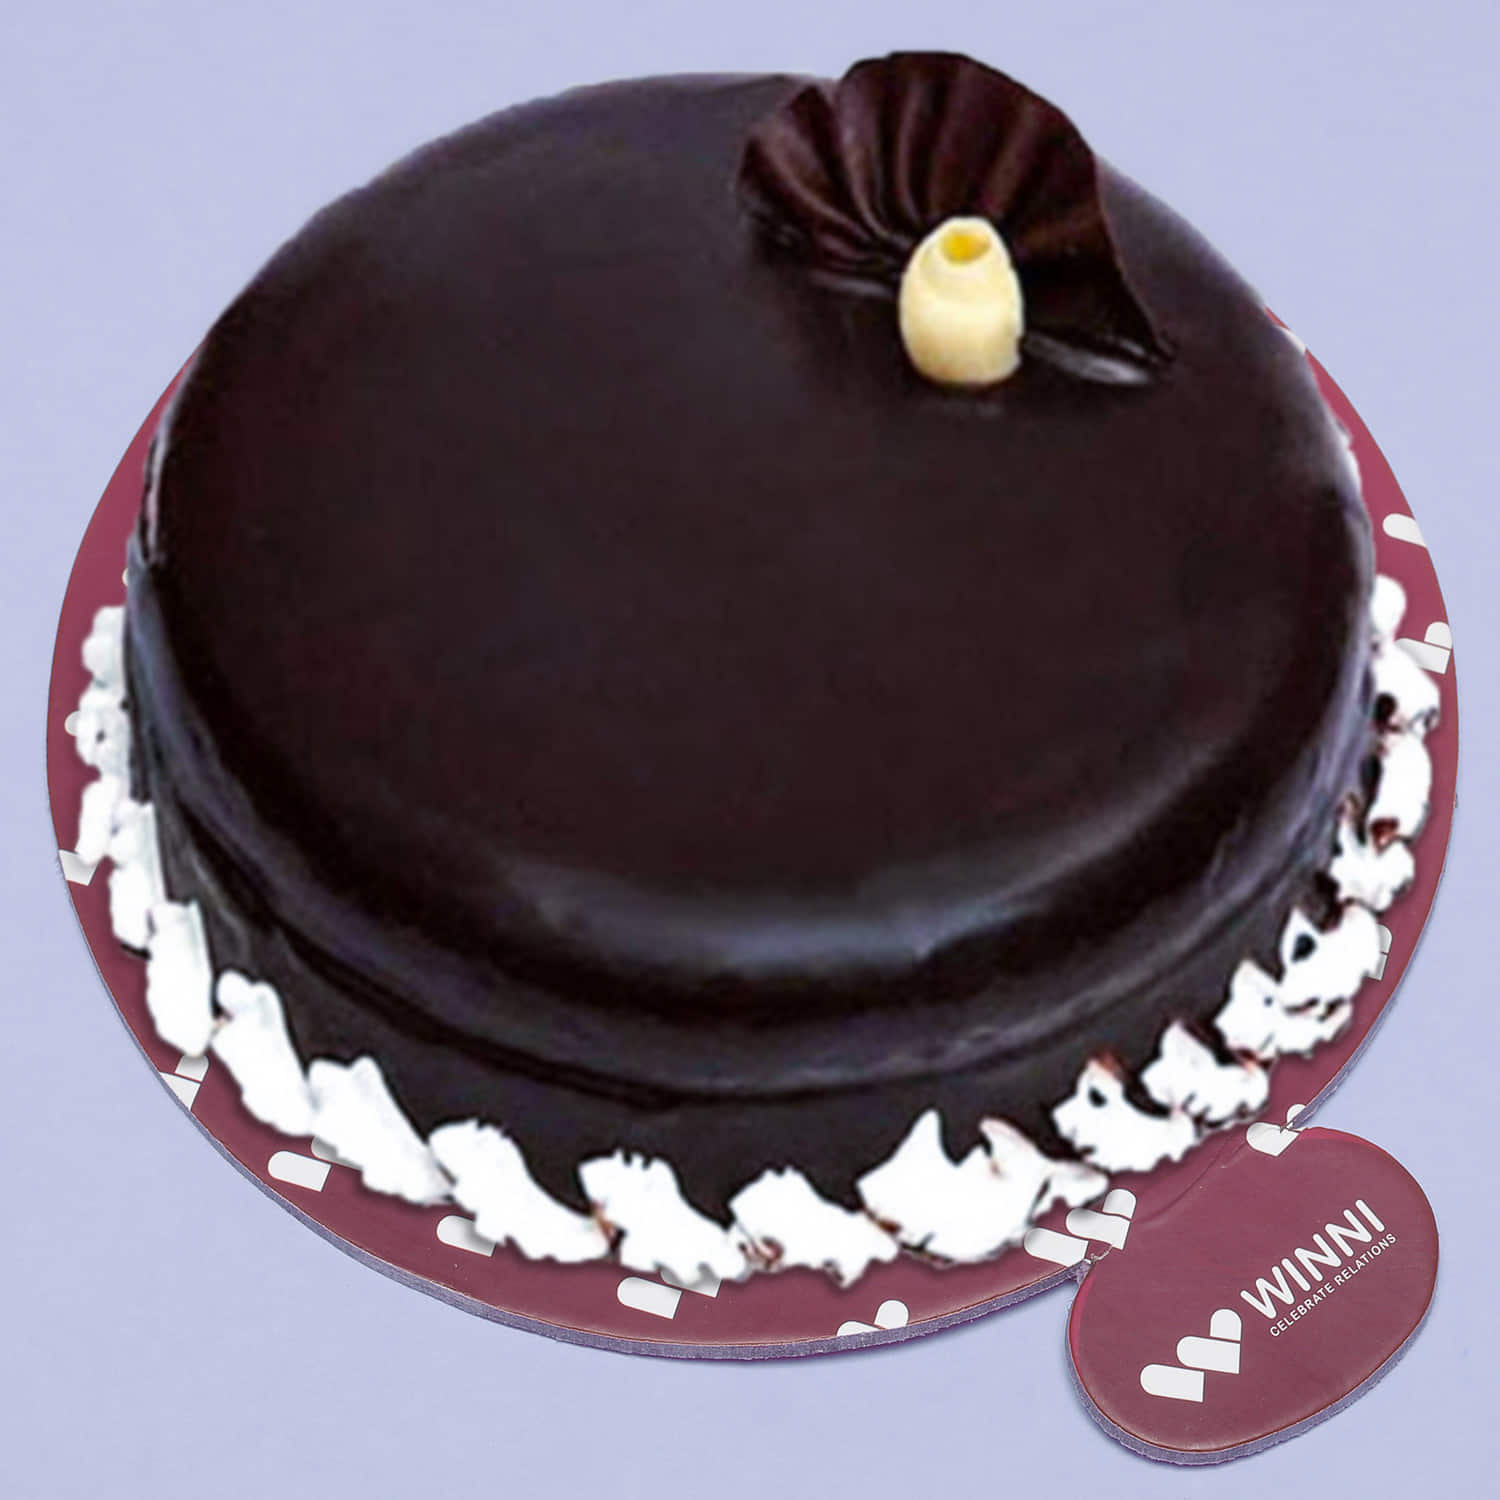 Black Magic Chocolate Cake | Diethood